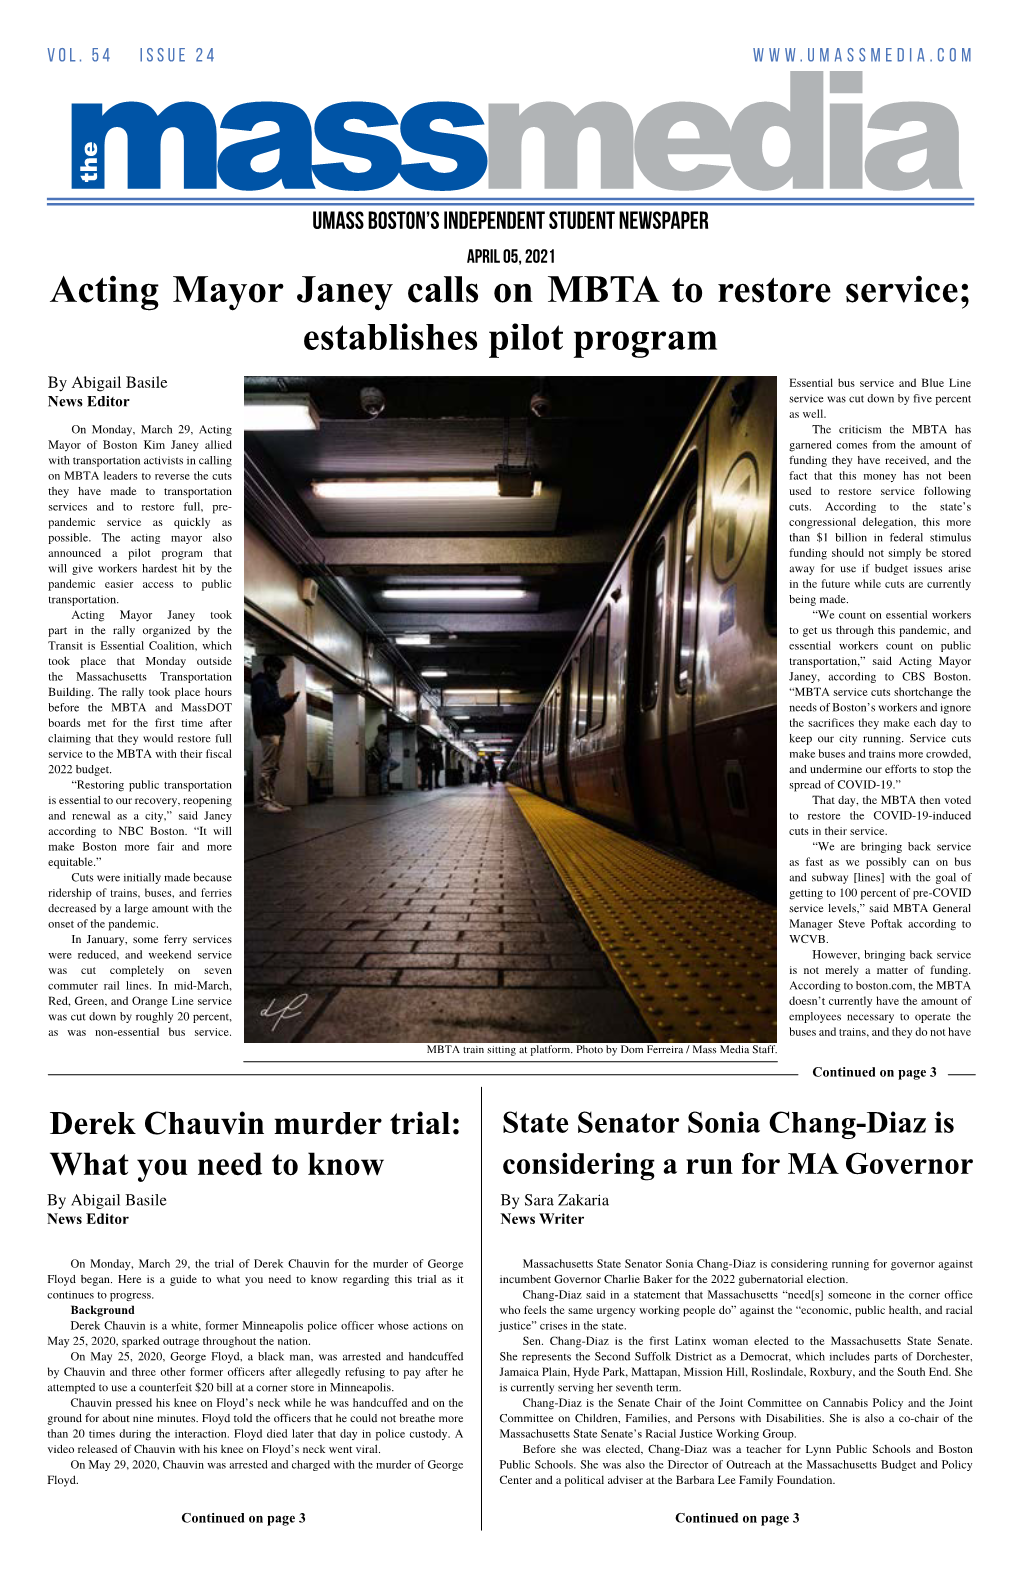 Acting Mayor Janey Calls on MBTA to Restore Service; Establishes Pilot Program